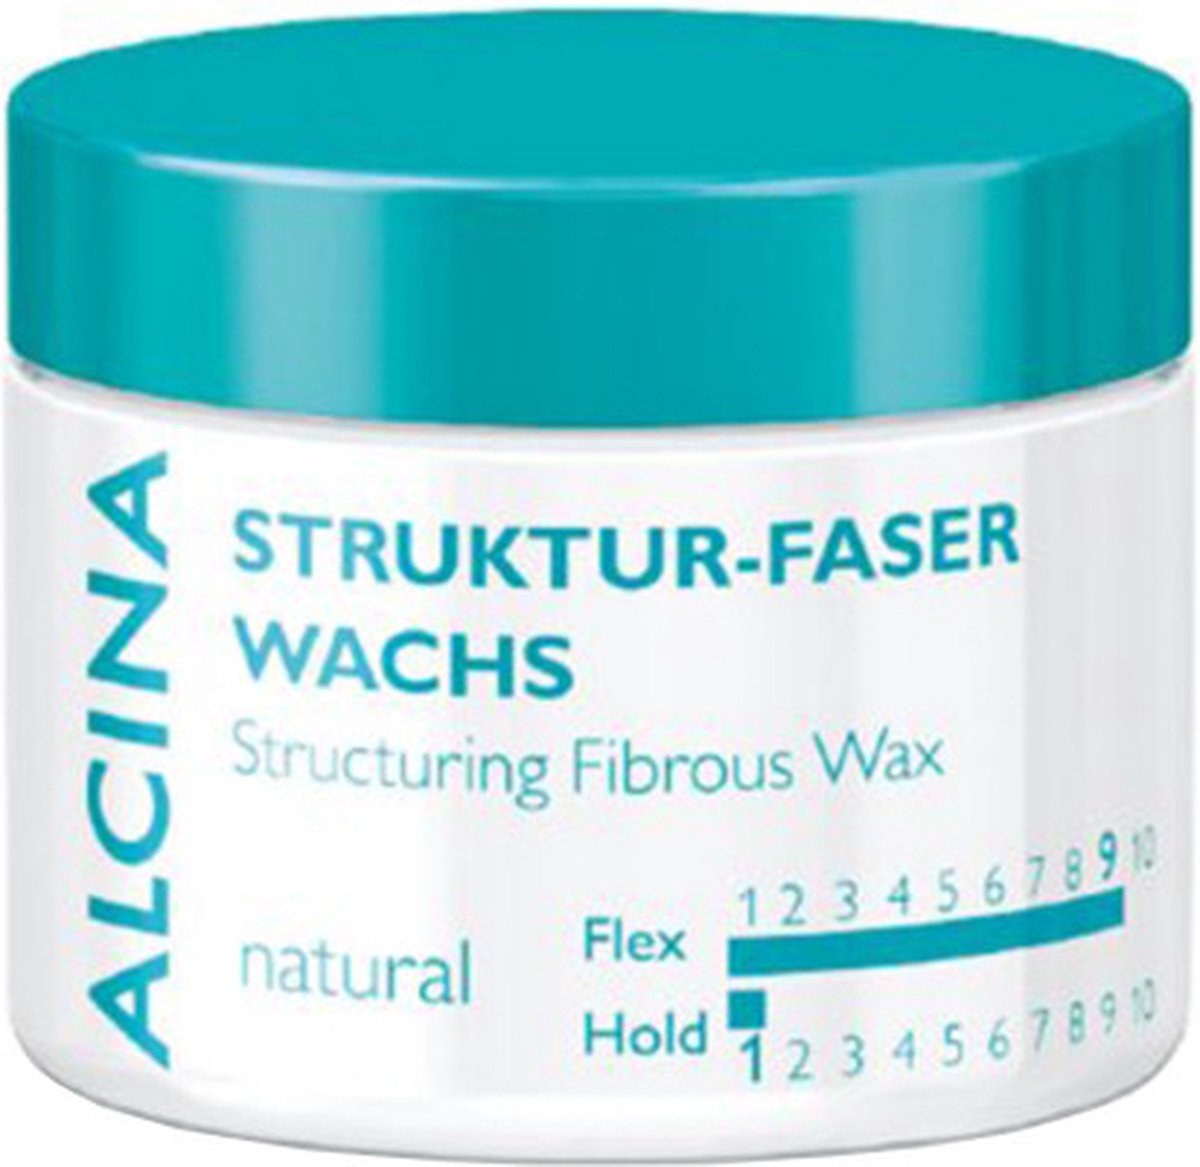 Alcina Wax Styling Natural Struktur-Faser Wachs